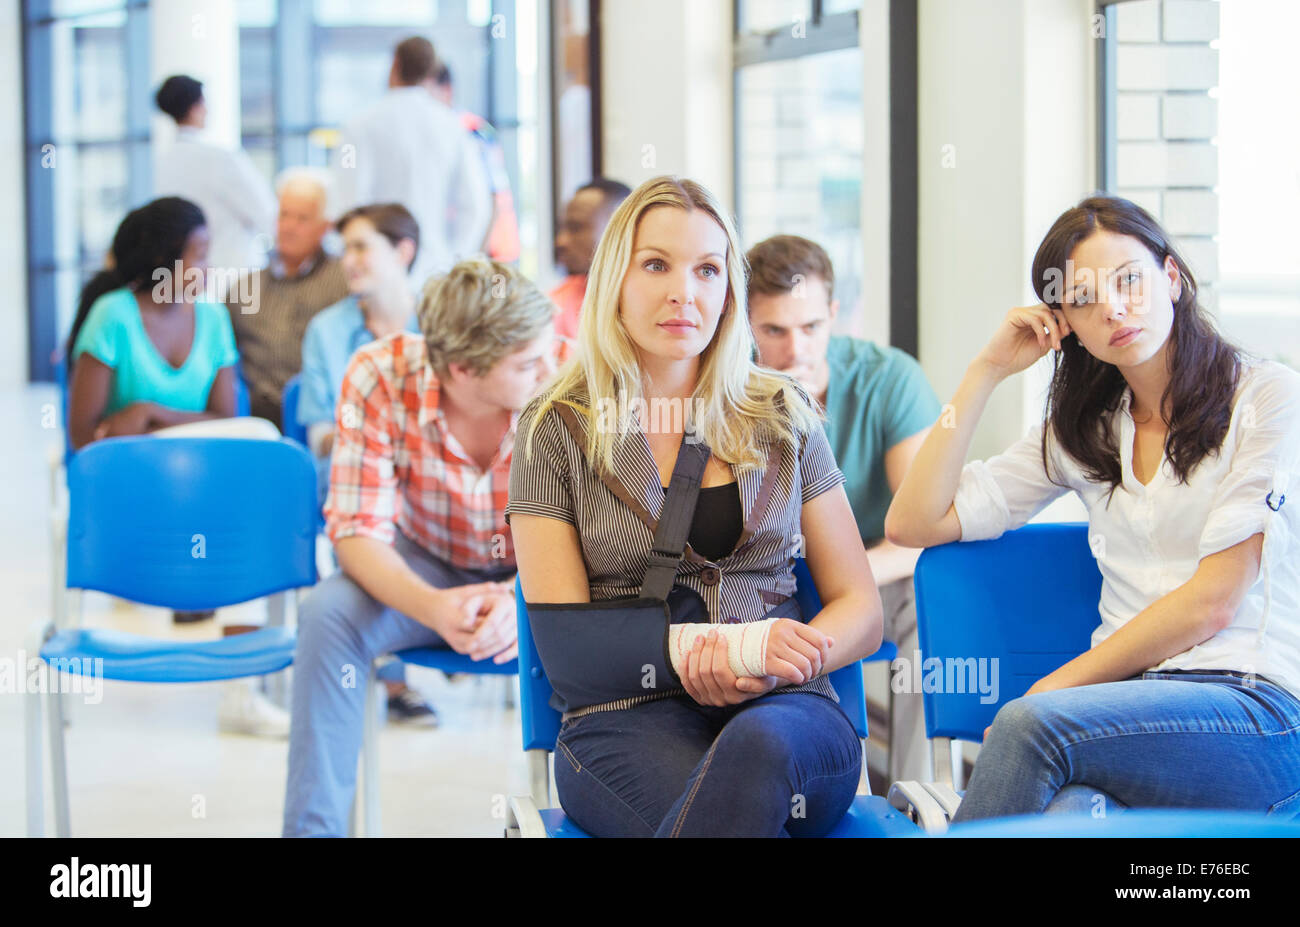 Women sitting in hospital waiting room Stock Photo